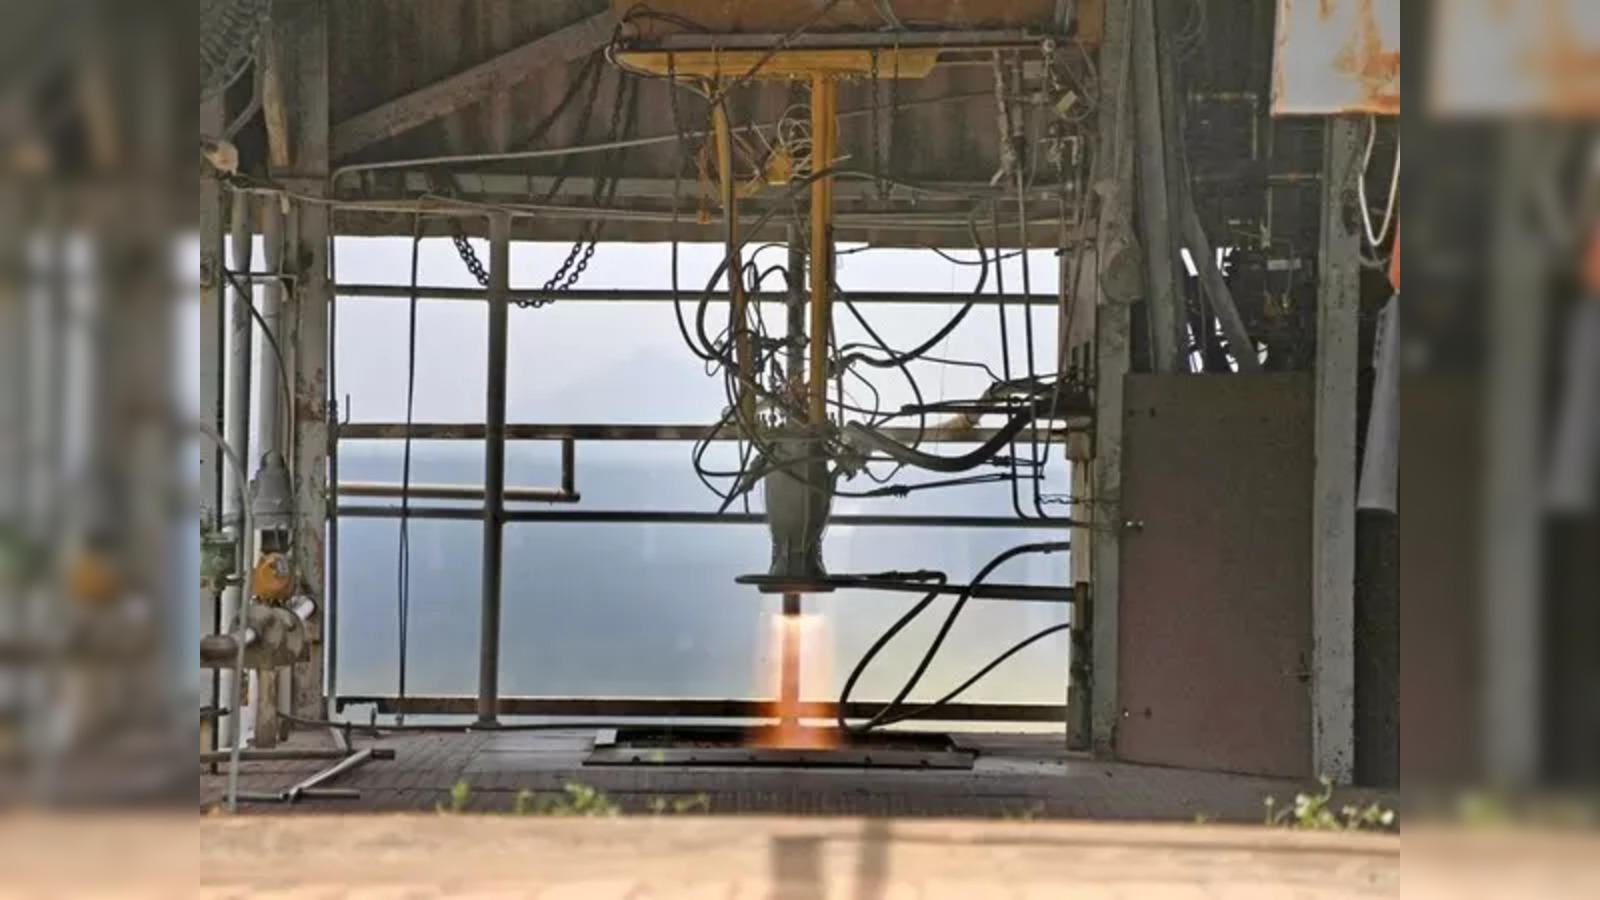 3D printed rocket engine: ISRO achieves major milestone with 3D printed rocket engine test - The Economic Times